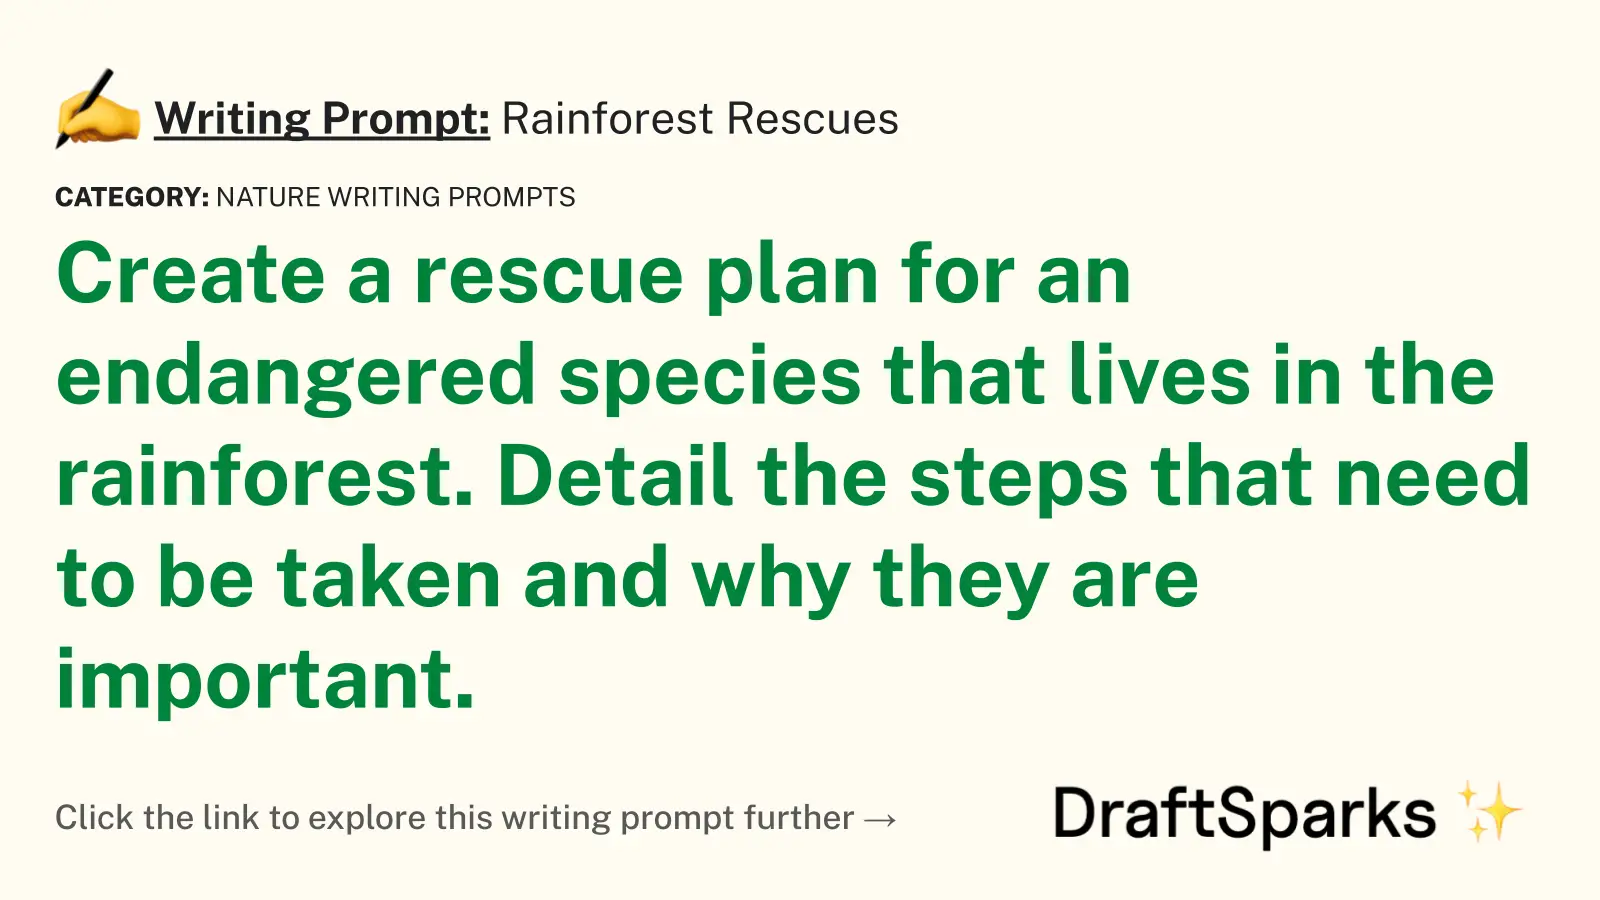 Rainforest Rescues